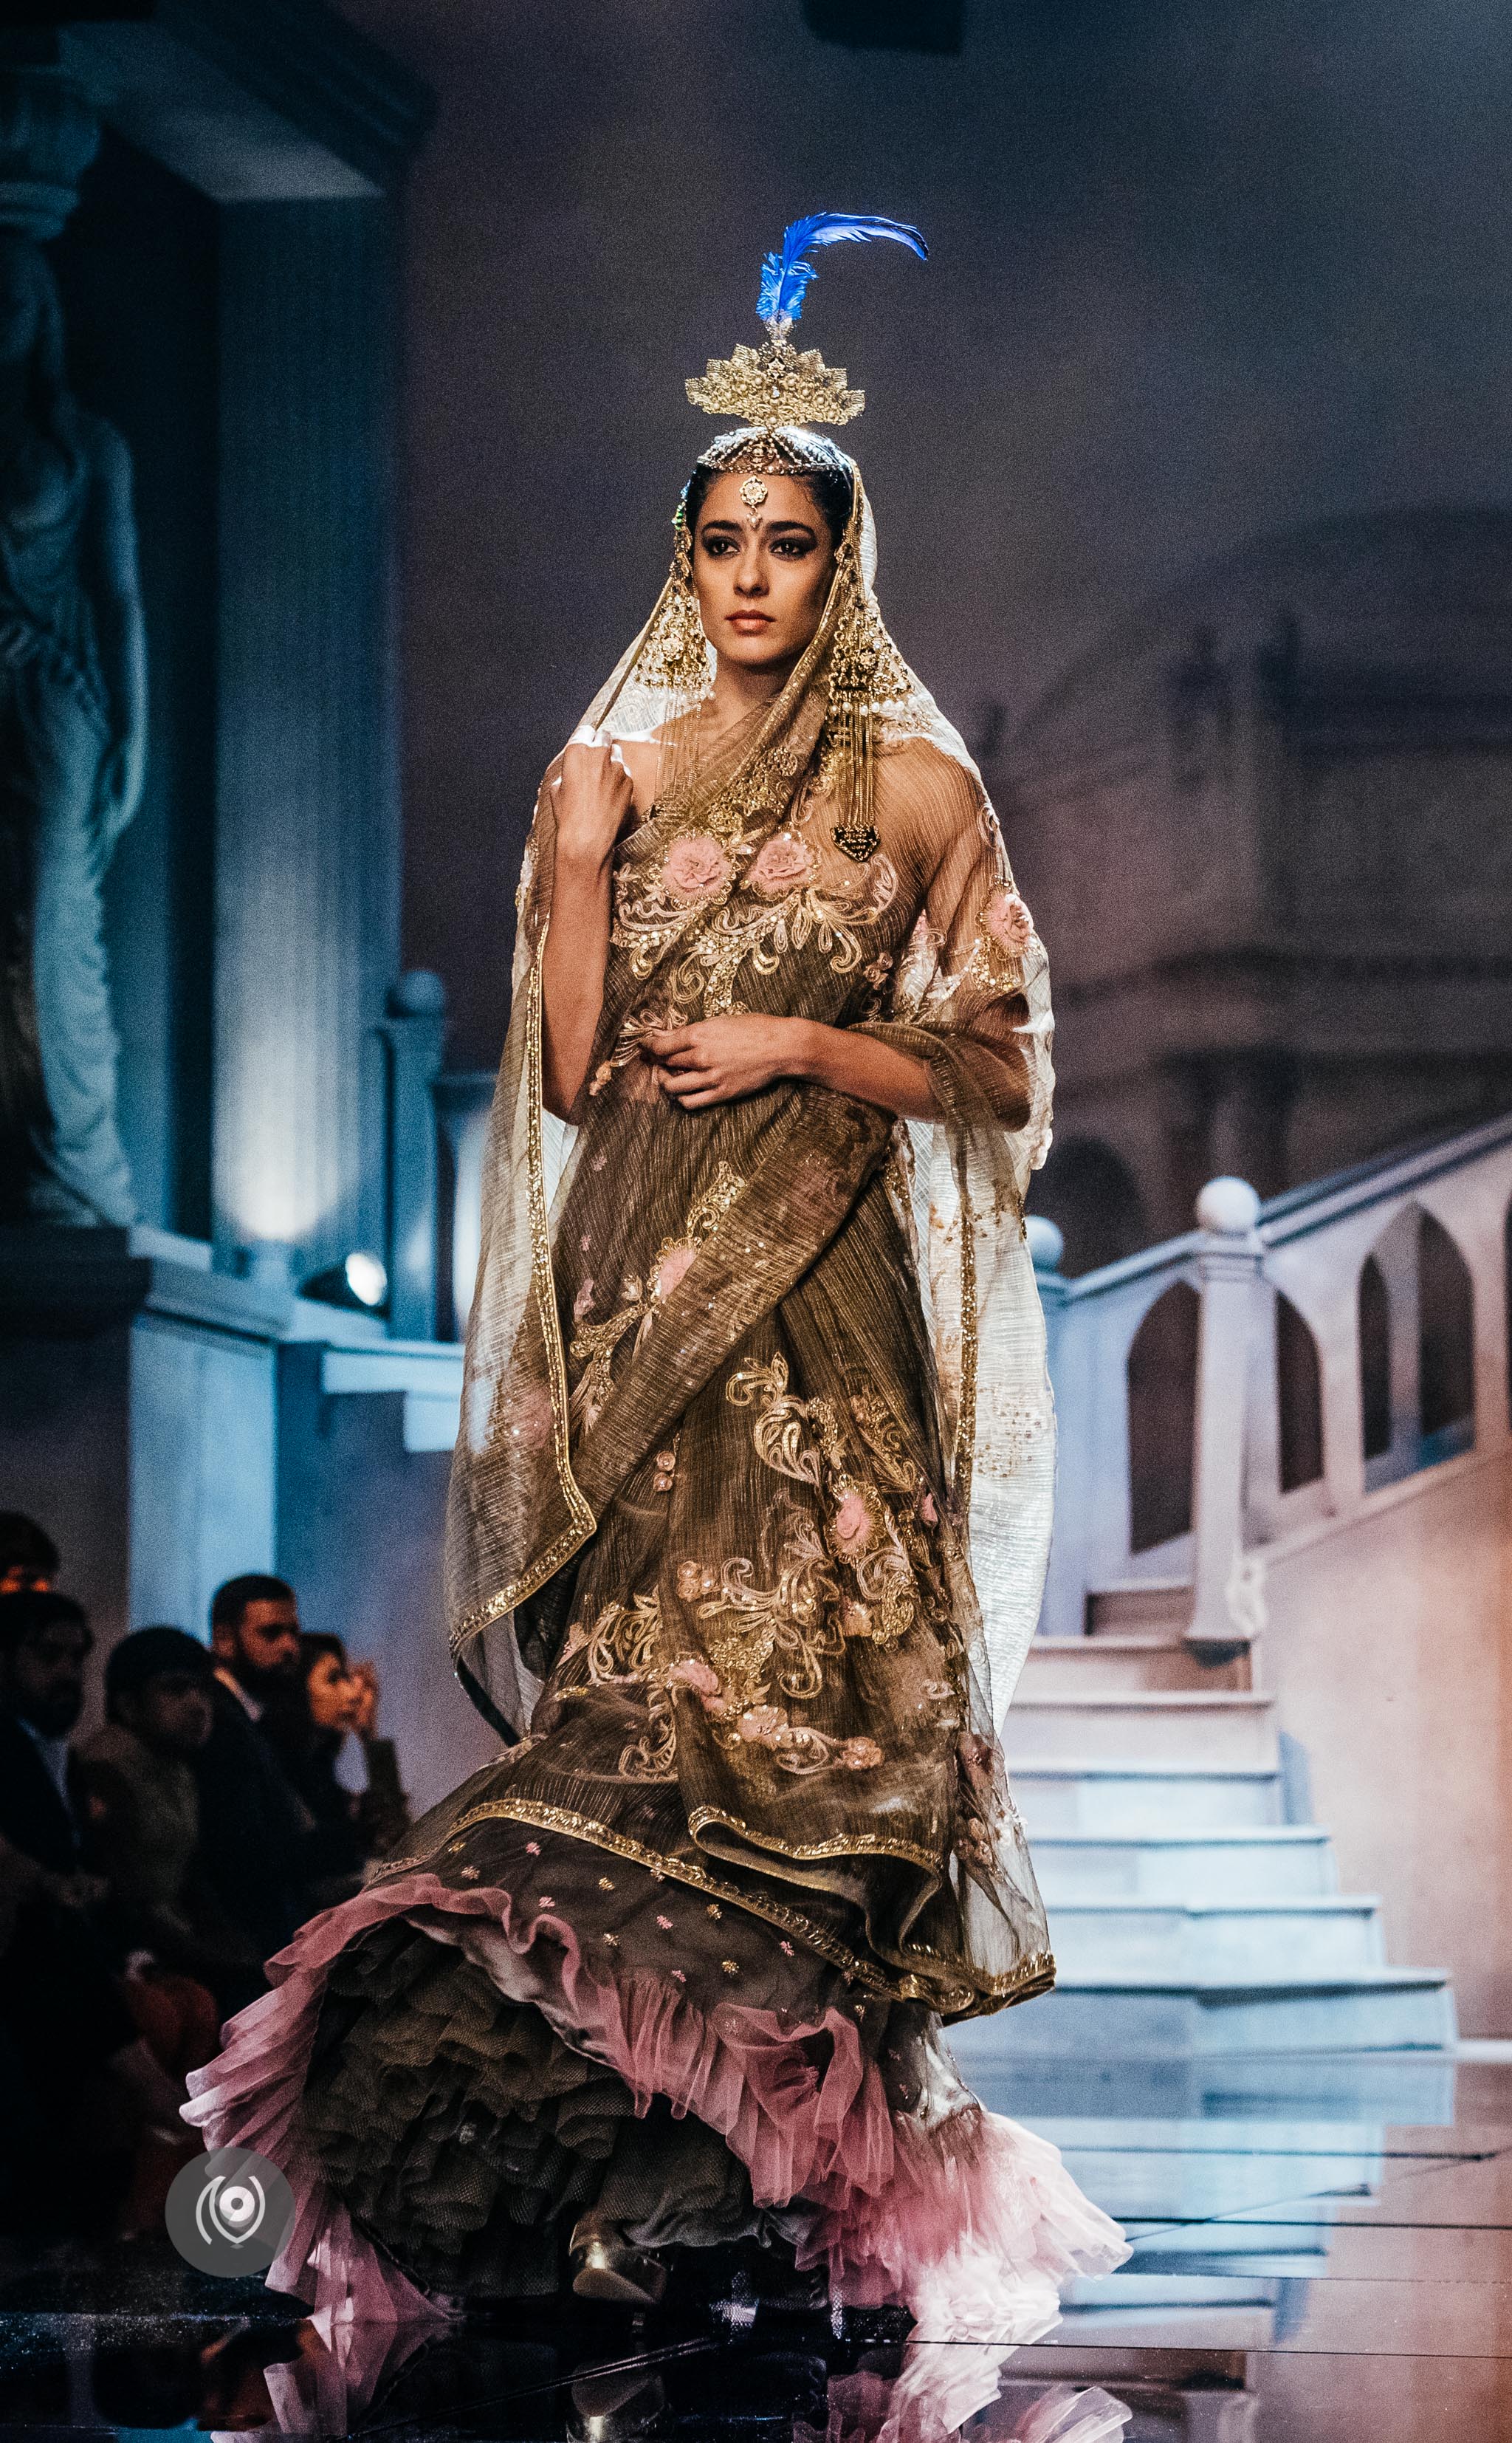 #SwarovskiCrystals Suneet Varma Grand Finale, BMW India Bridal Fashion Week, #BMWIBFW, Naina.co Luxury & Lifestyle, Photographer Storyteller, Blogger #SwarovskiCouture